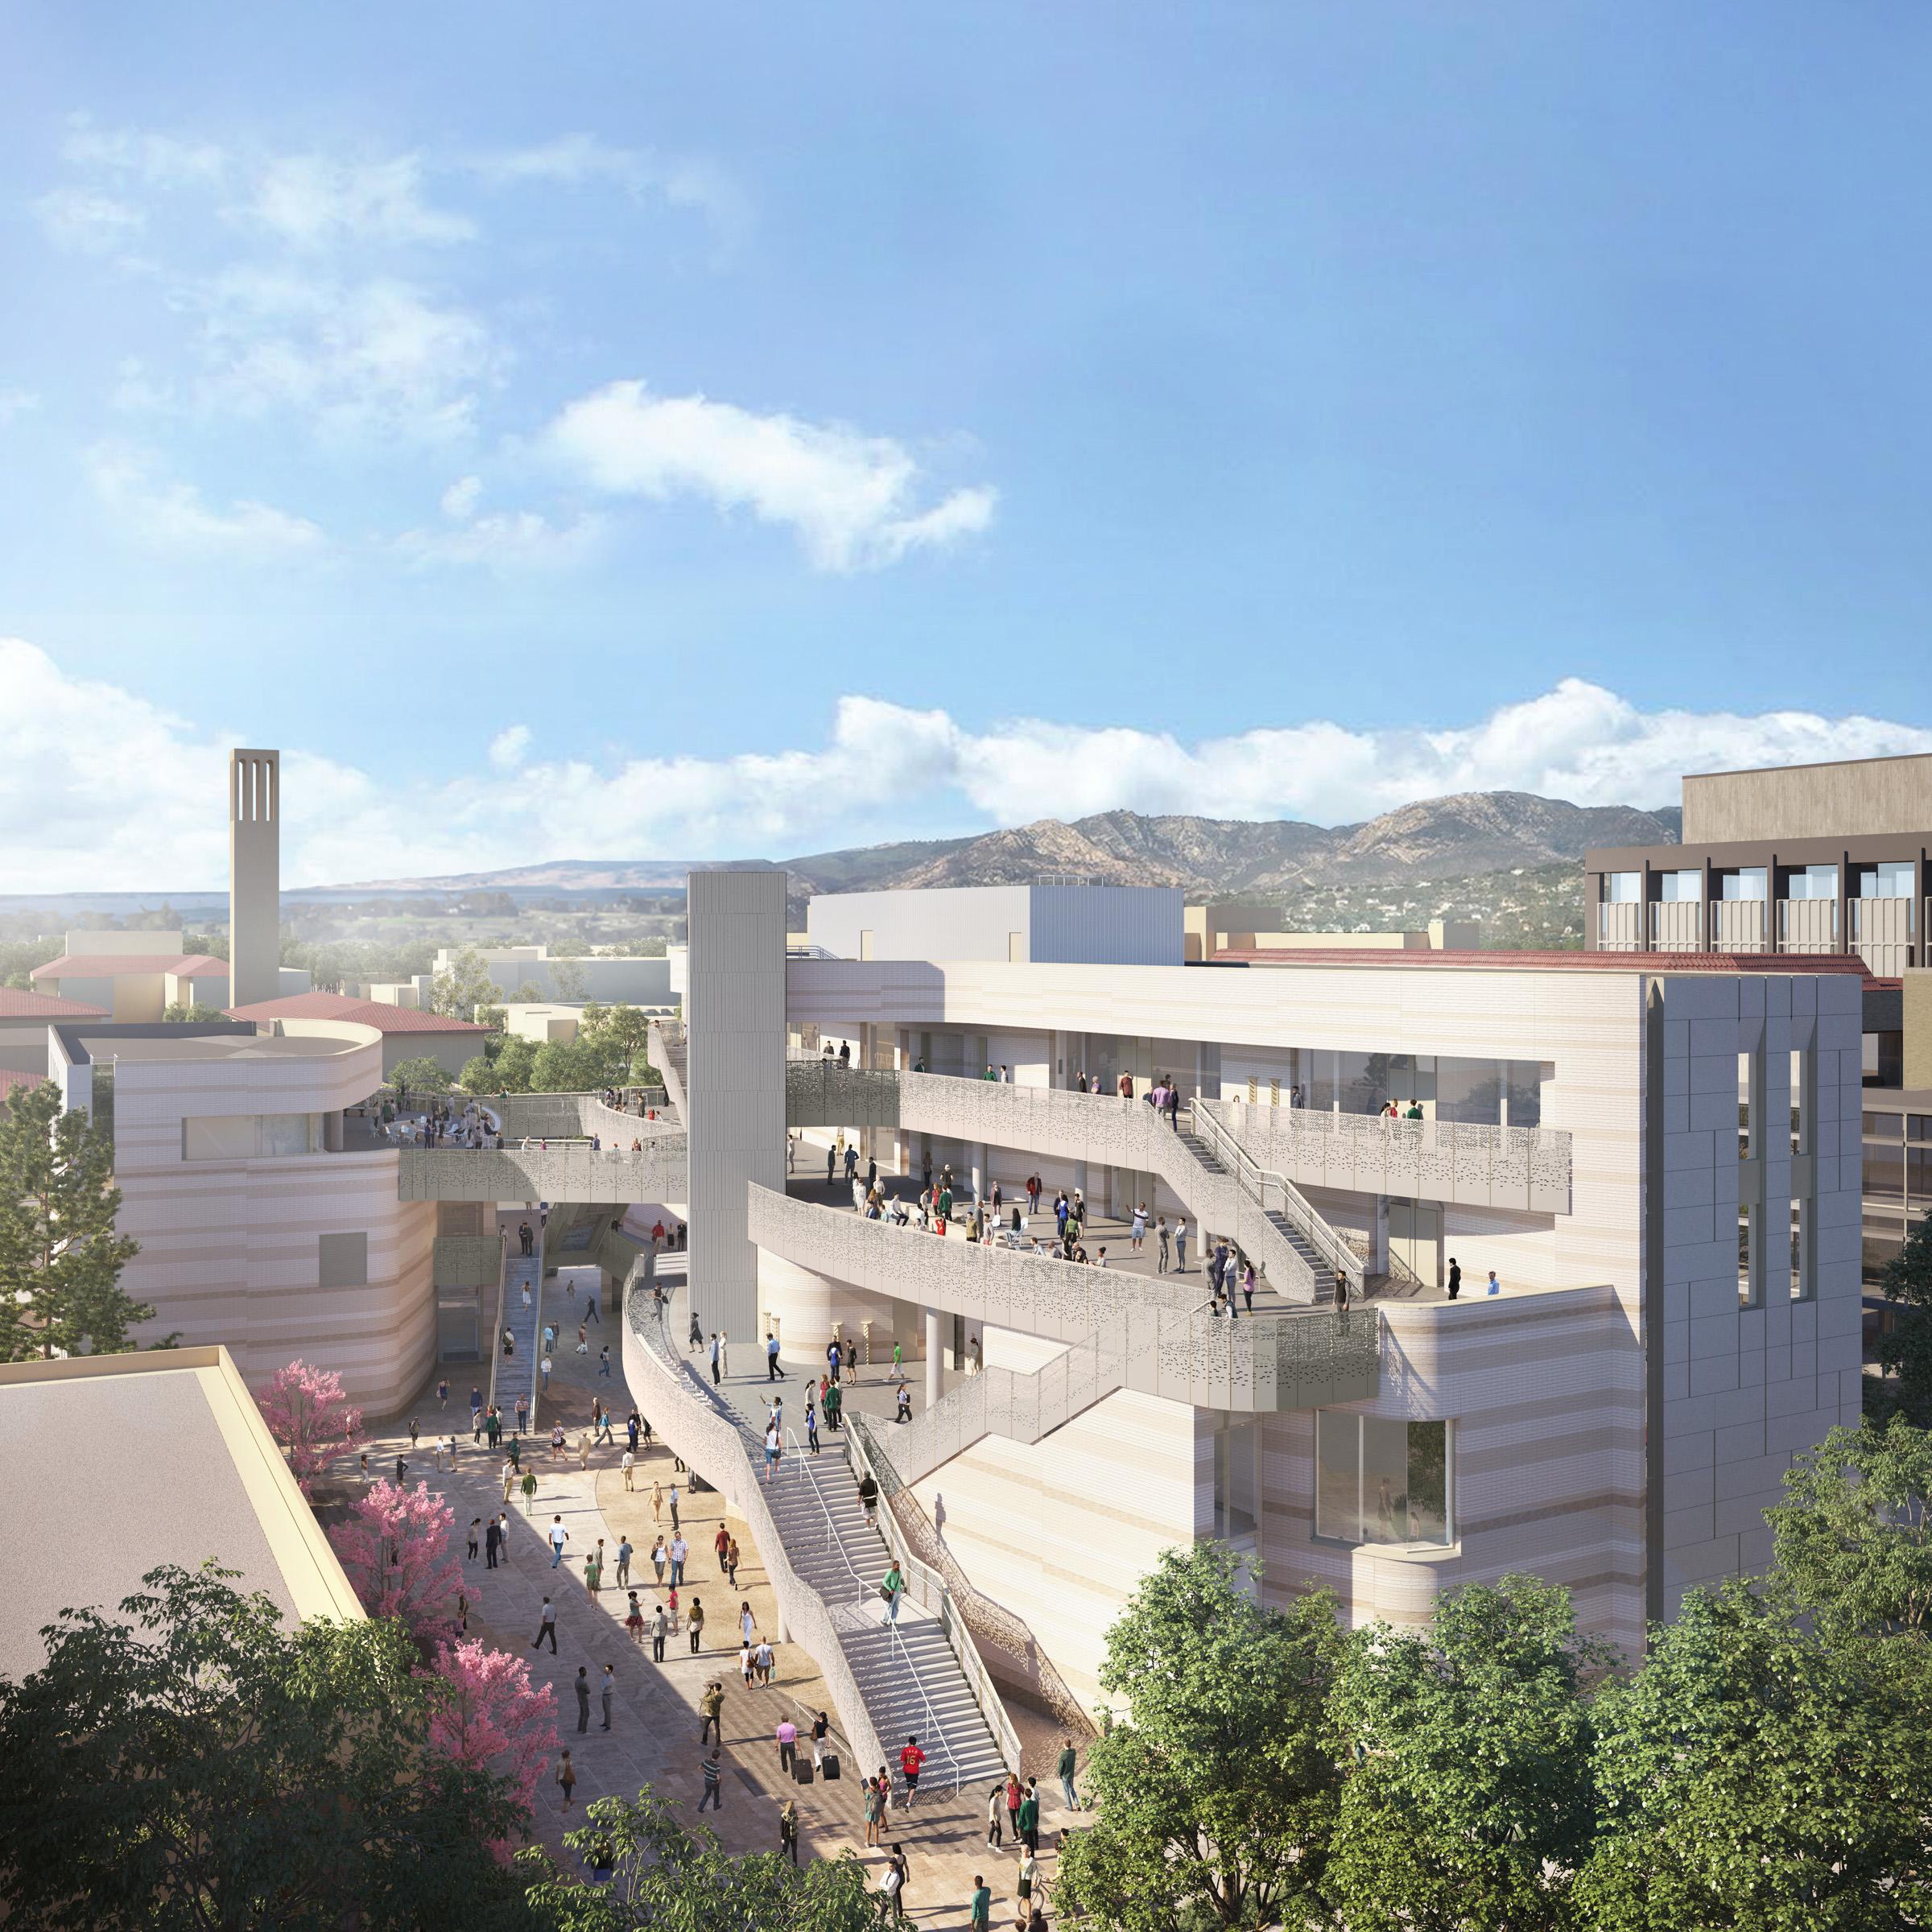 Visionsbild över UCSB nya campus